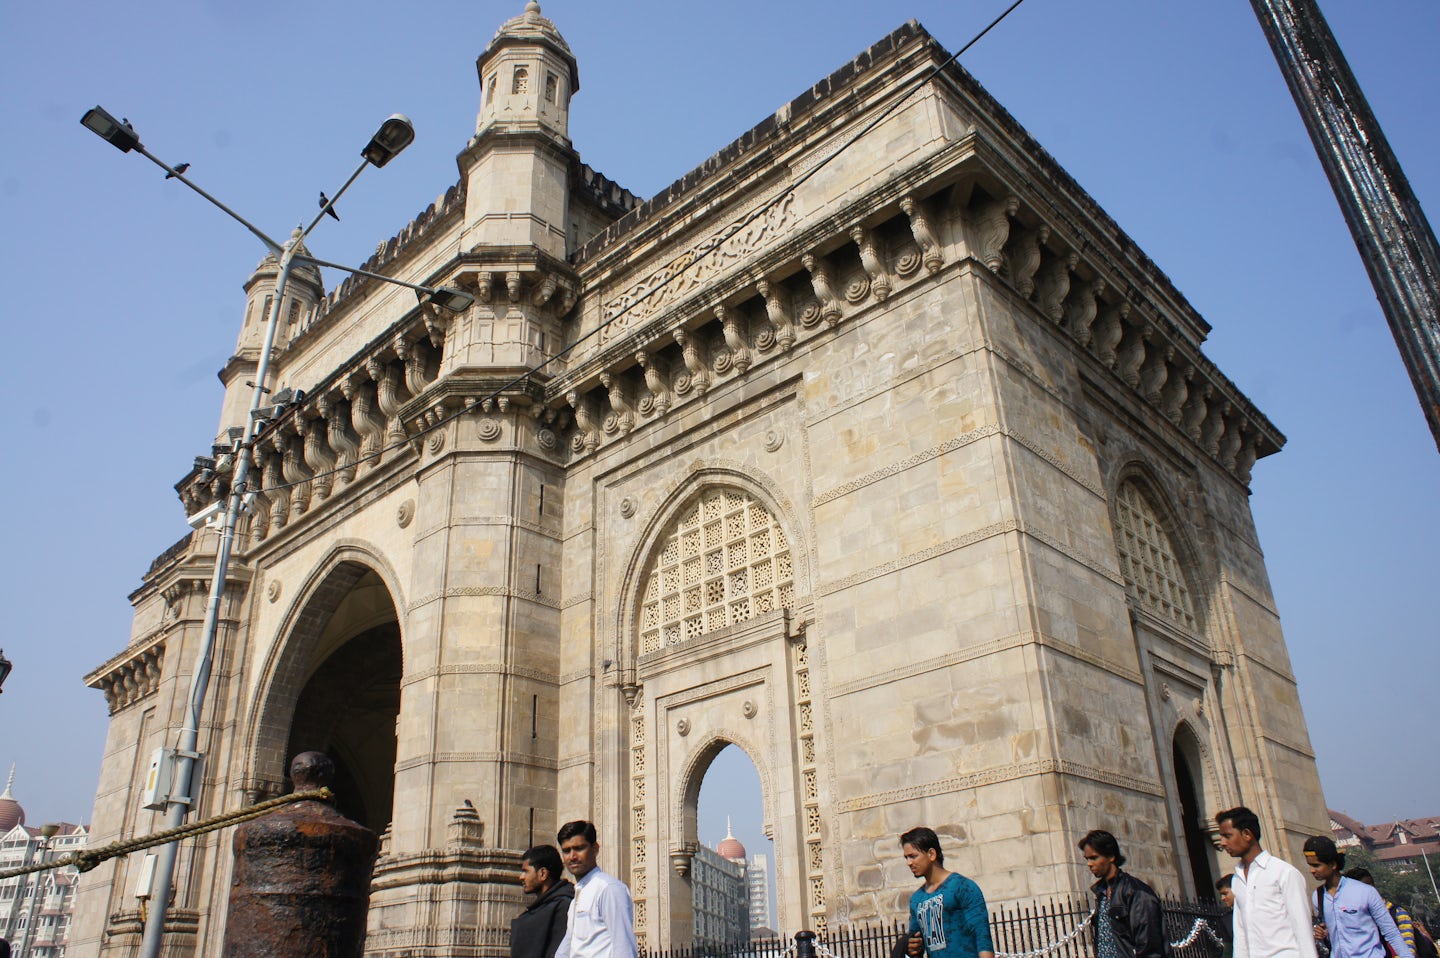 Mumbai - gateway of India